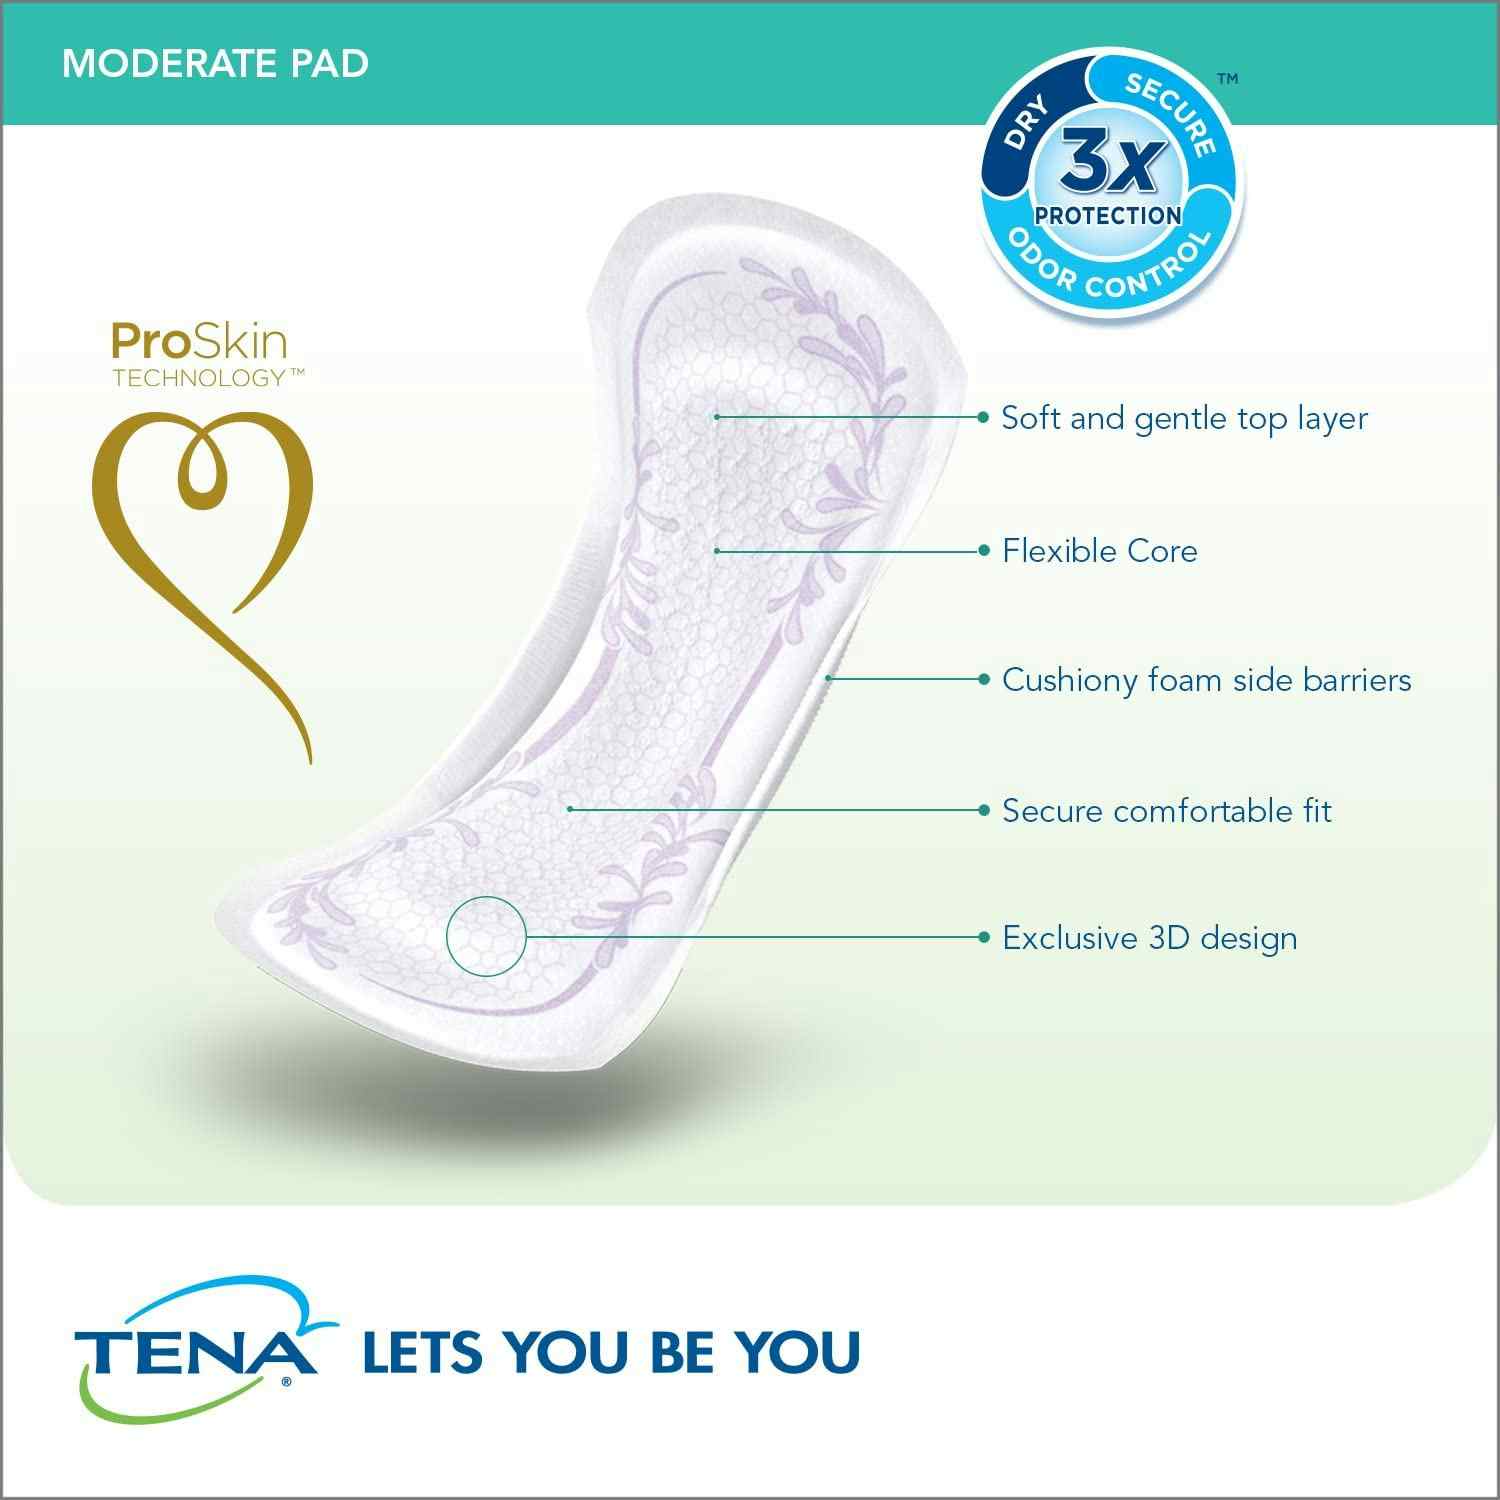 TENA Intimates Moderate Thin Incontinence Pads